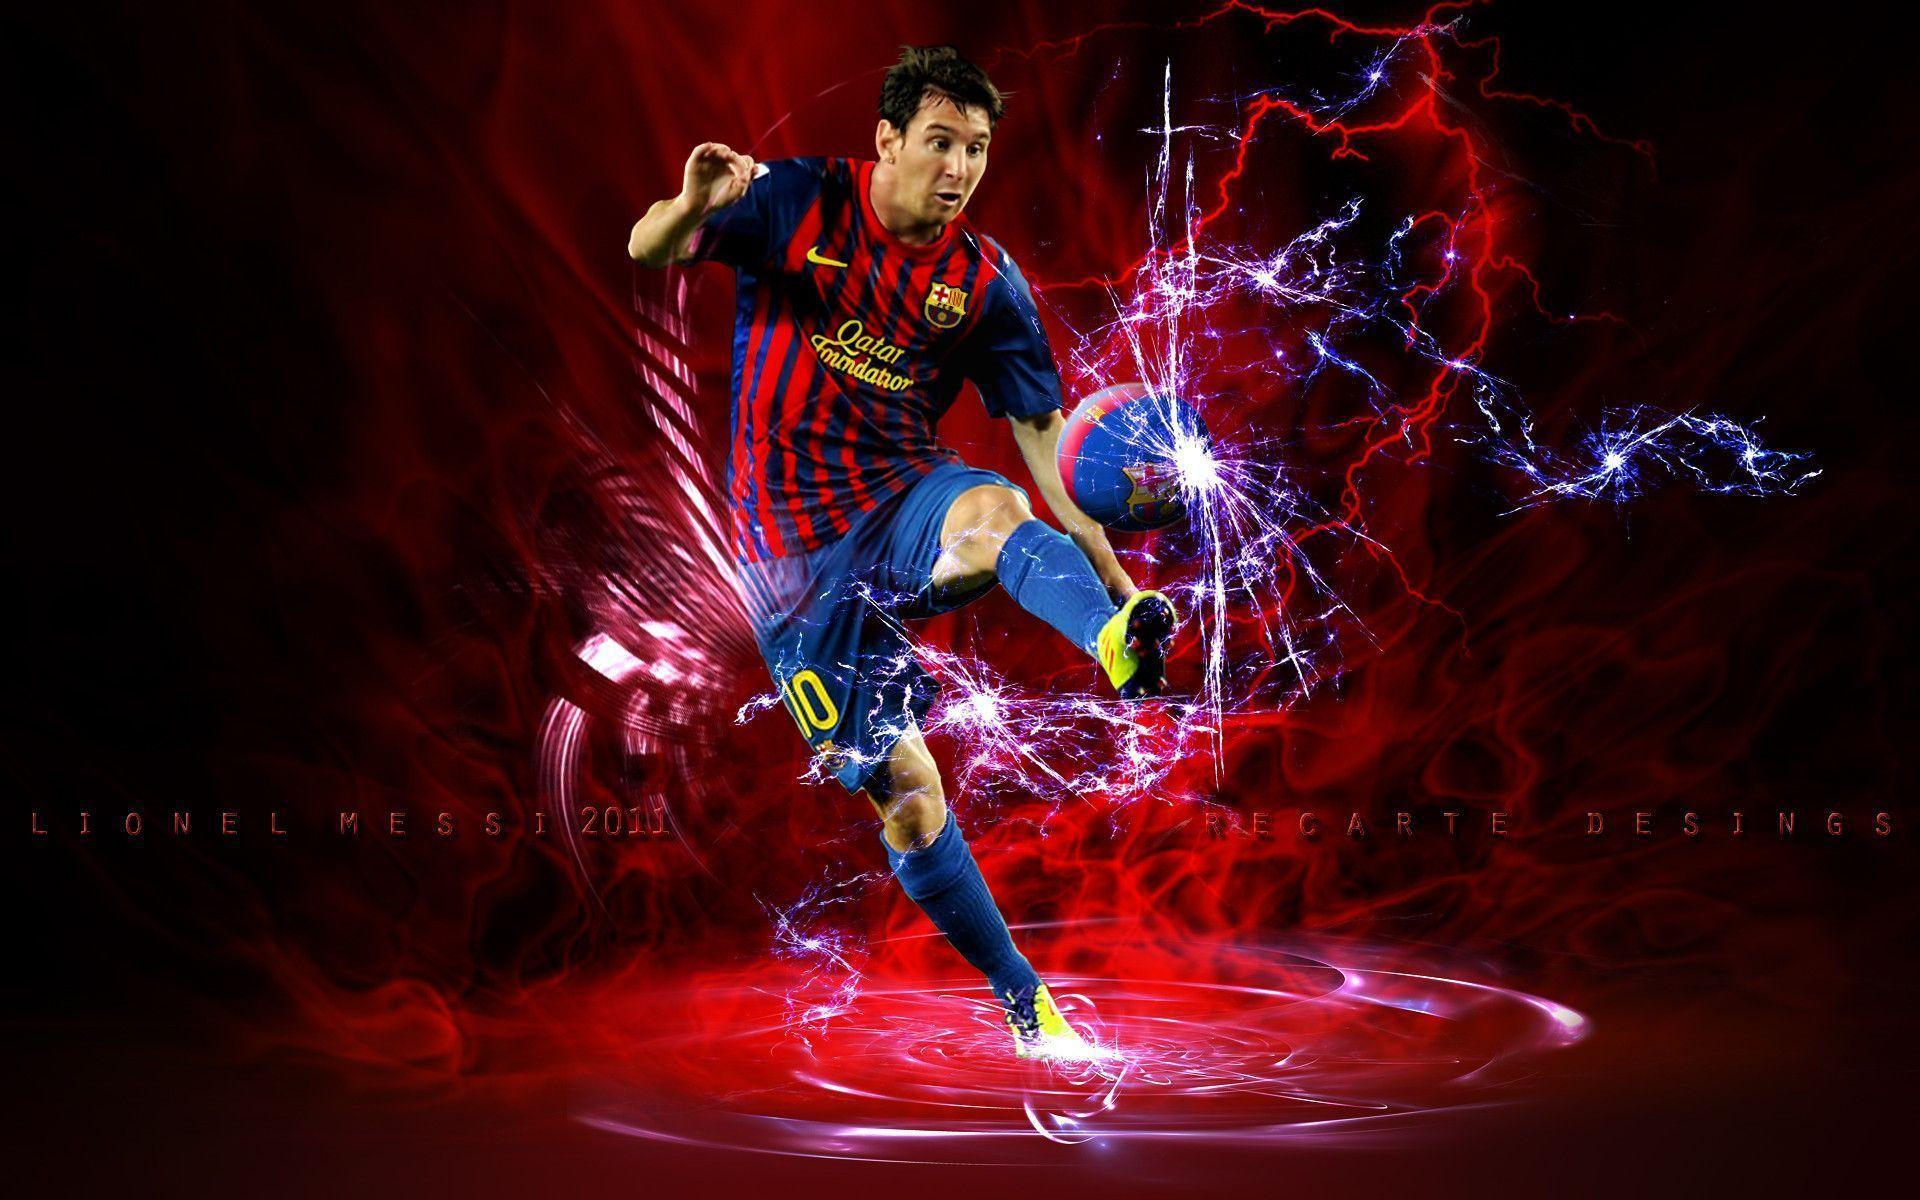 Lionel Messi Wallpaper HD 2015